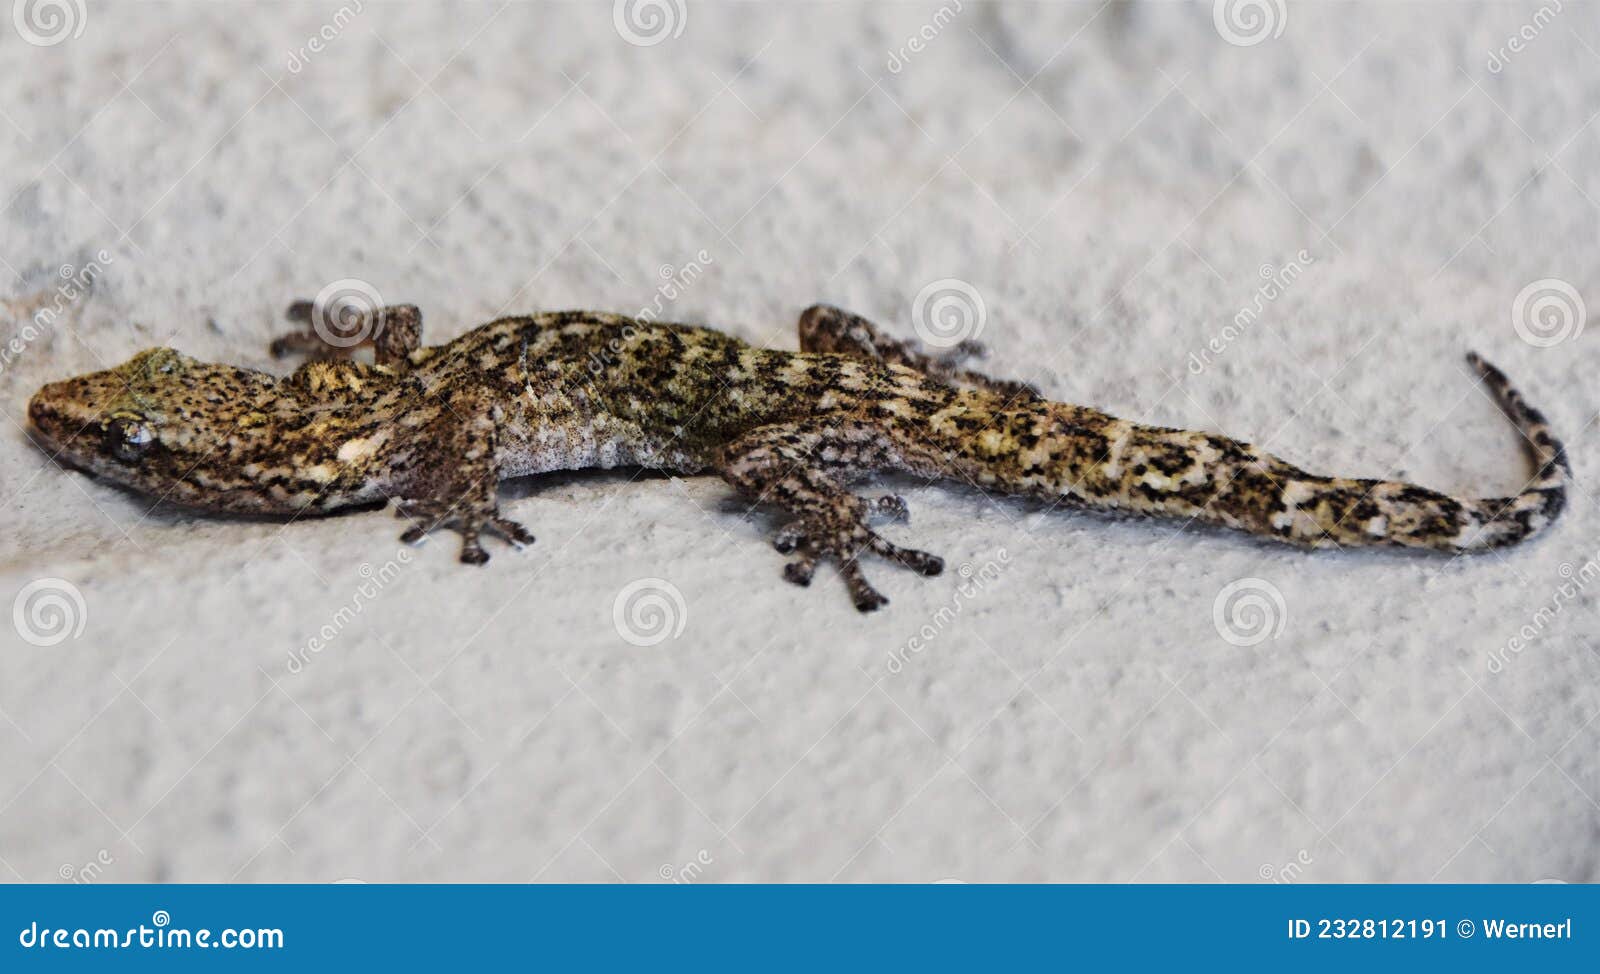 the pondo flat gecko